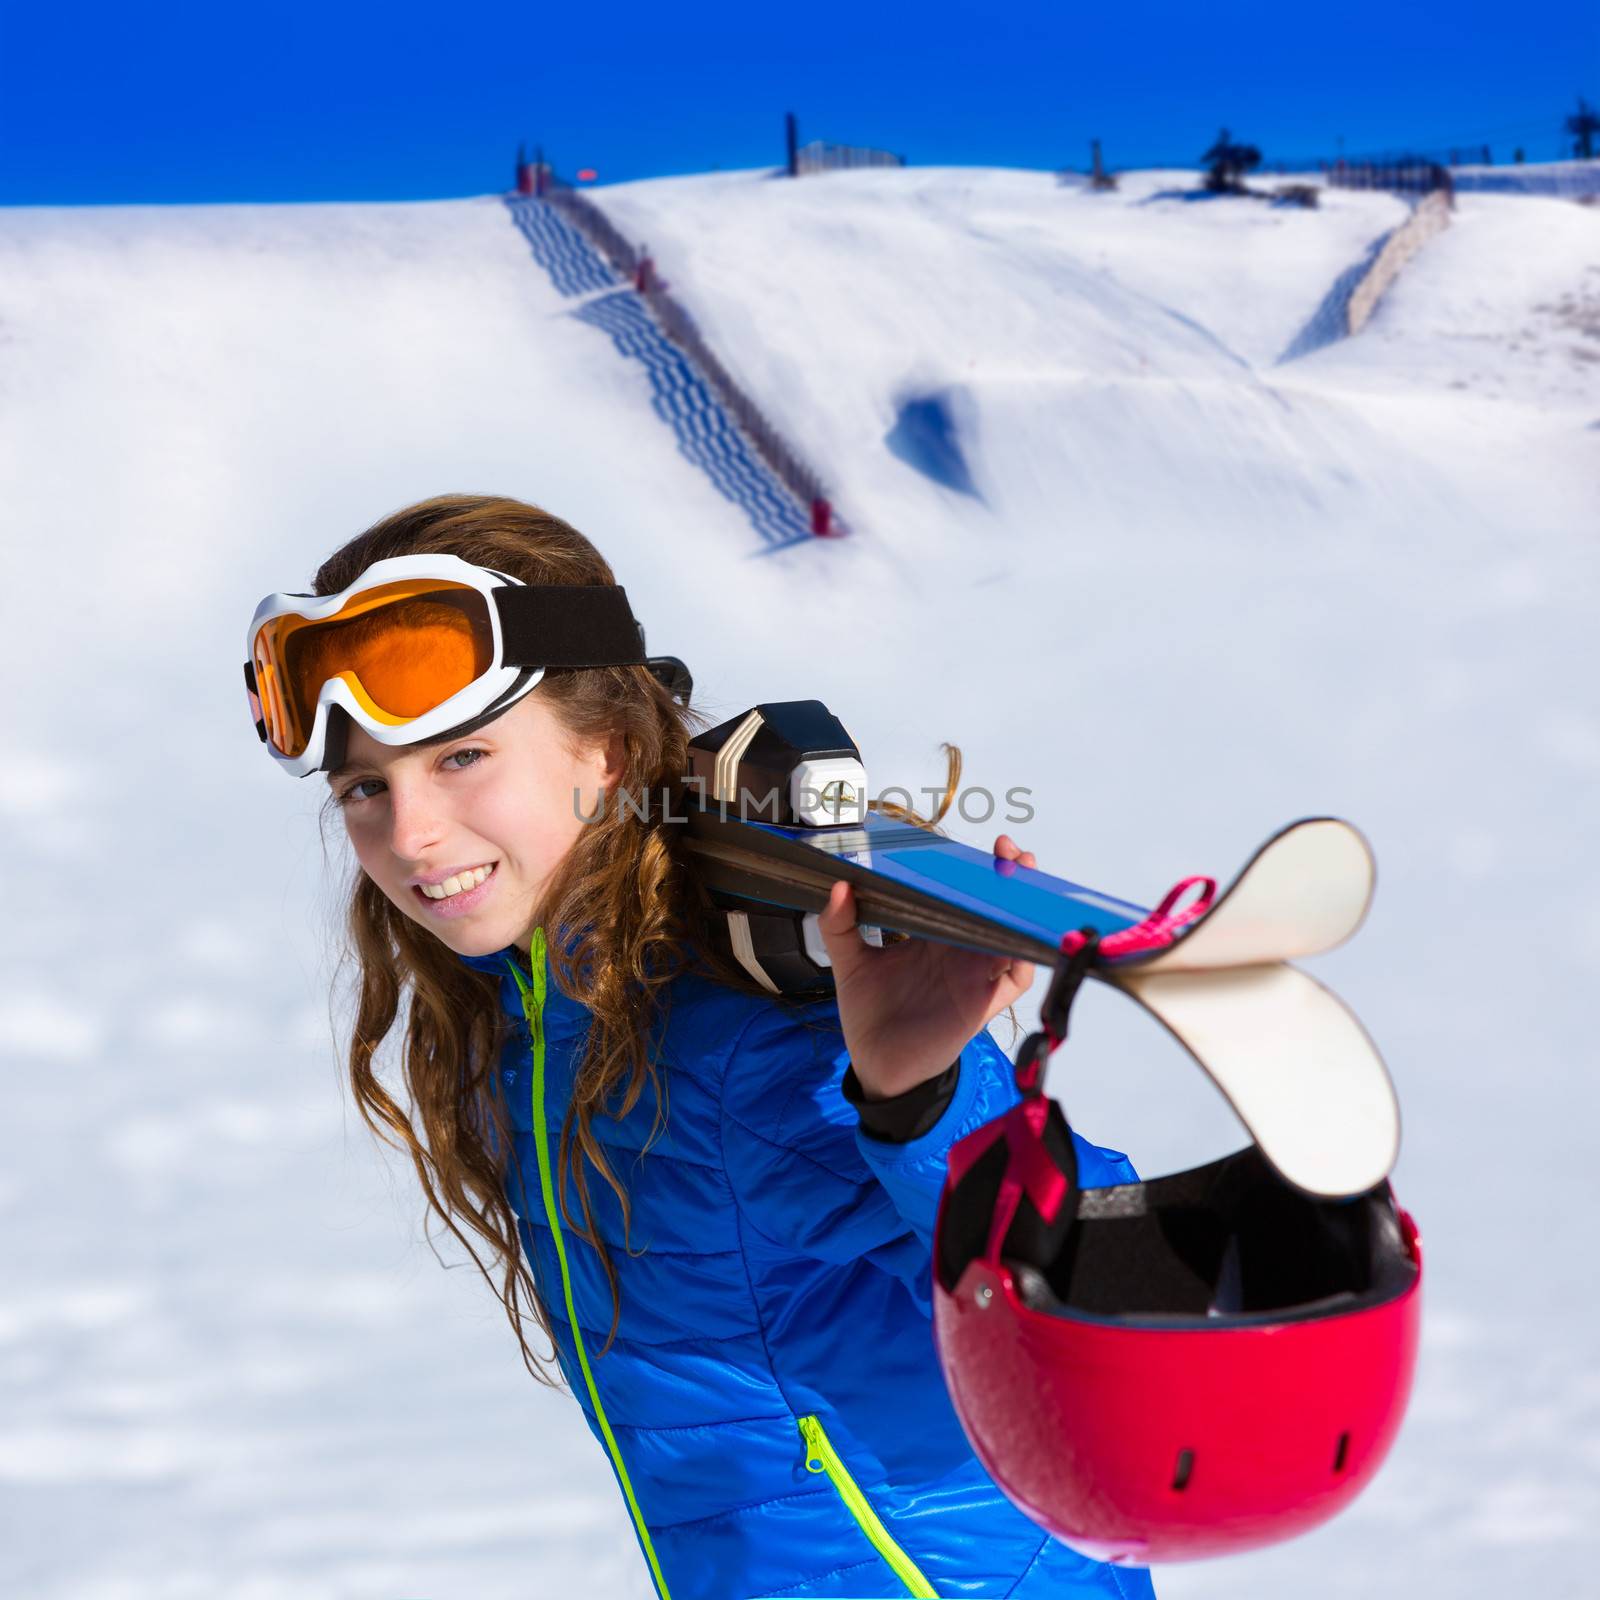 Kid girl winter snow with ski equipment by lunamarina